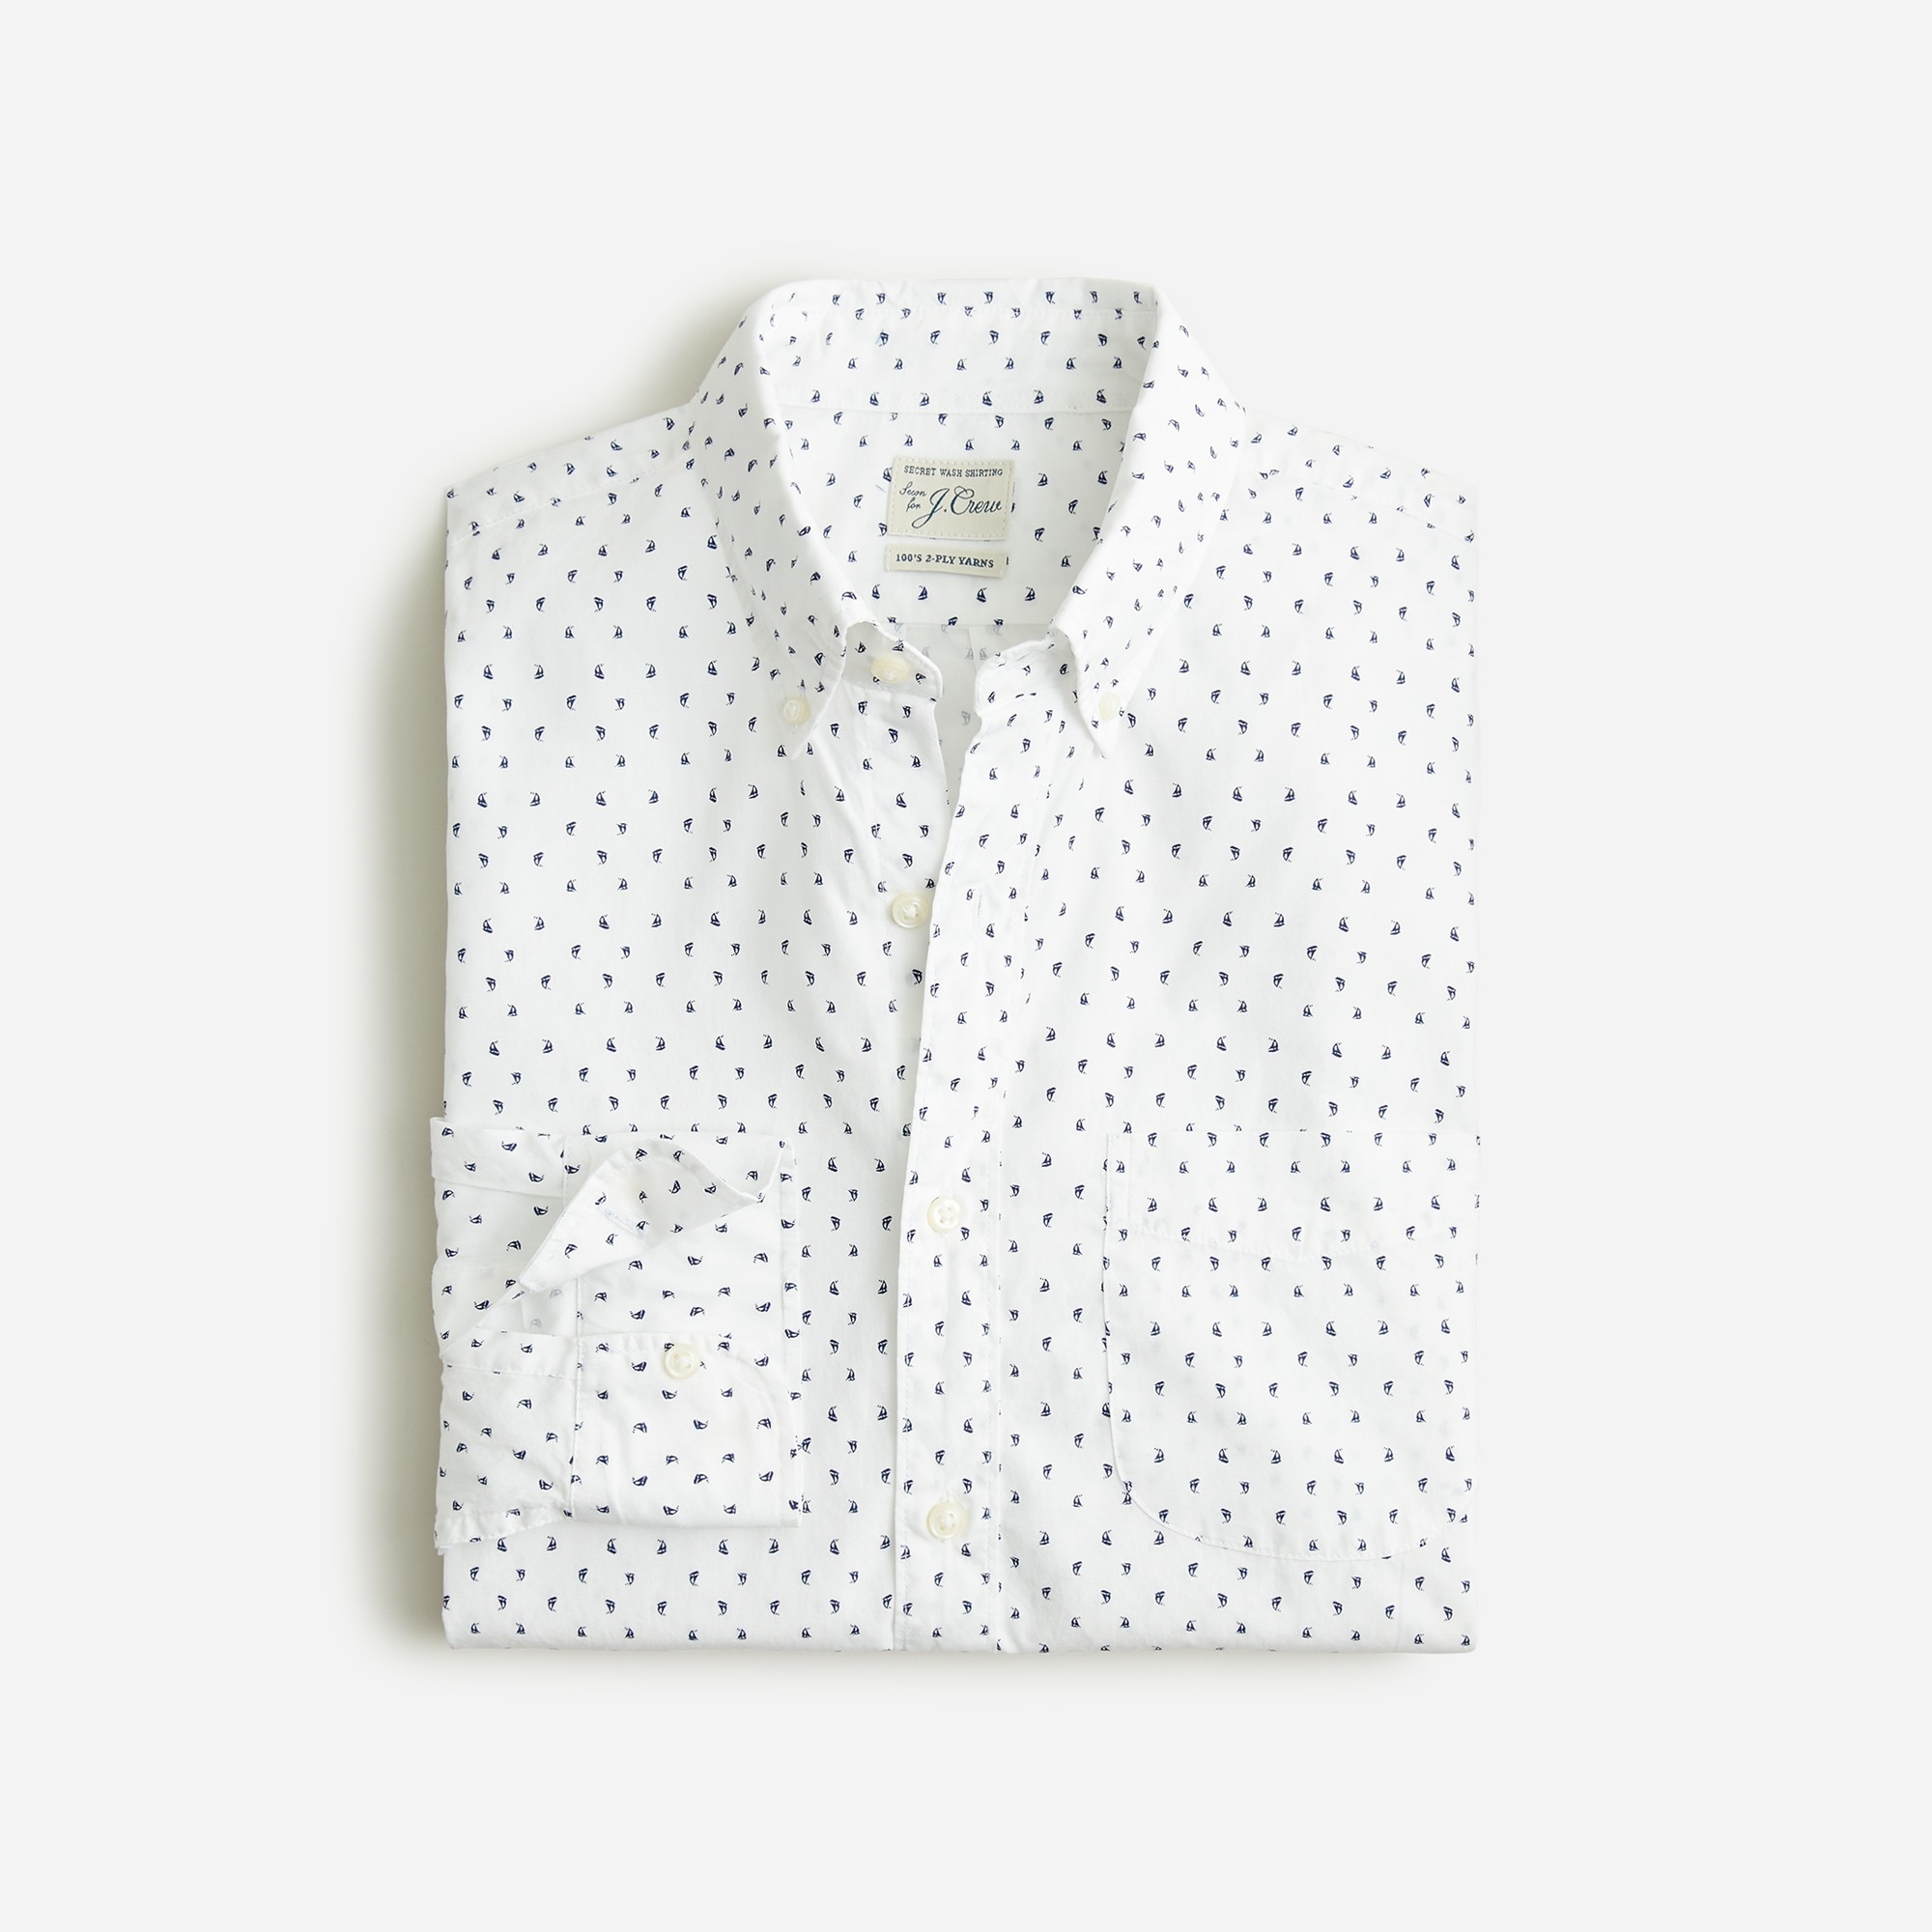 mens Slim Secret Wash cotton poplin shirt